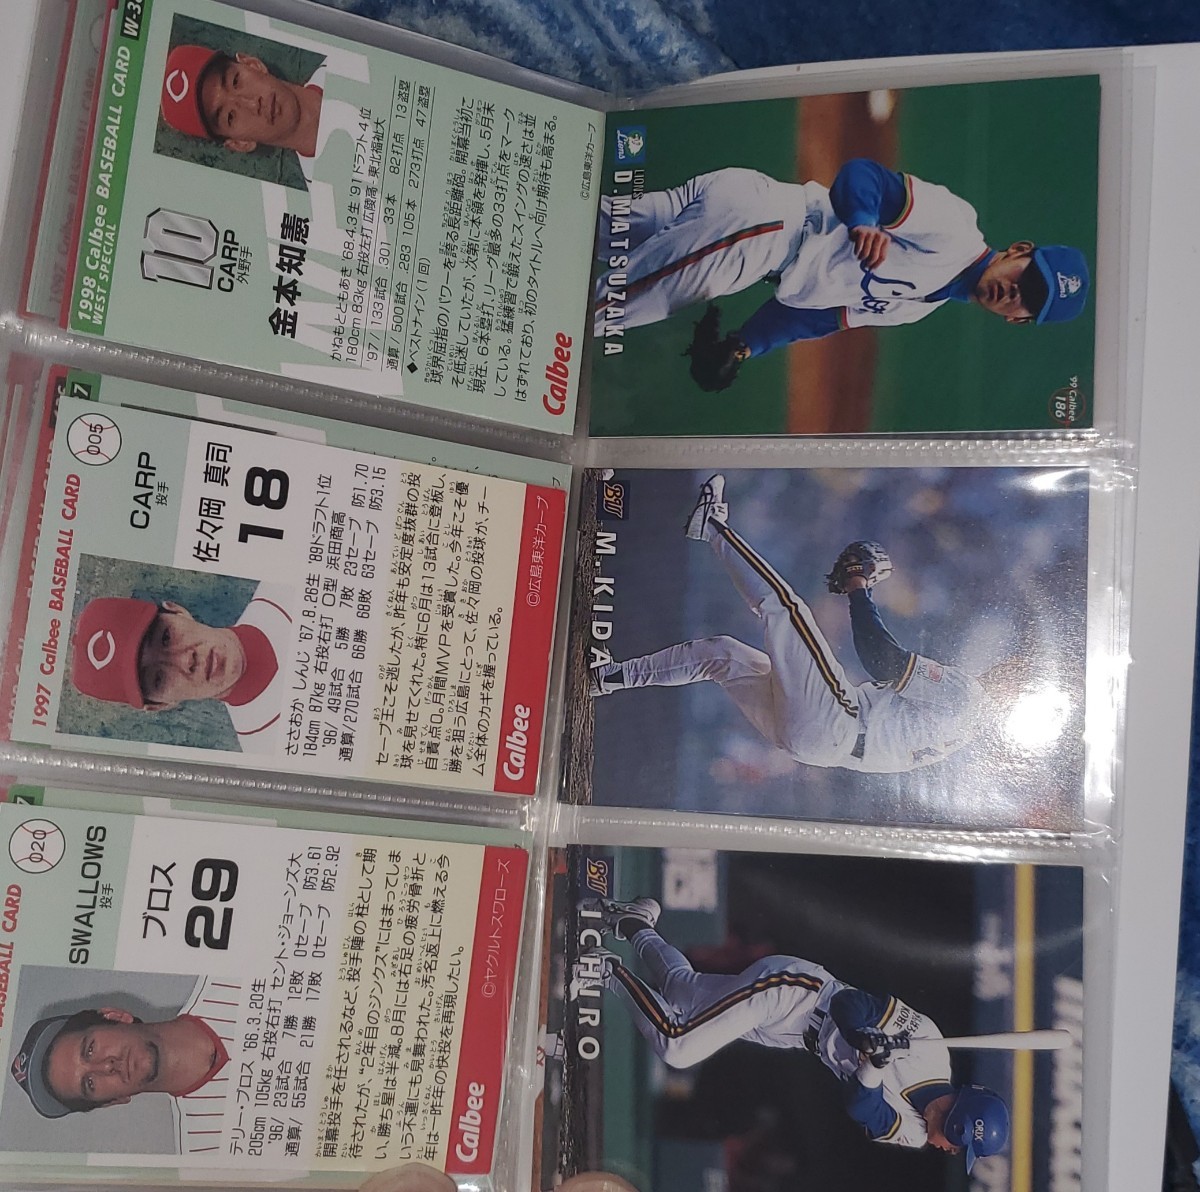  Calbee Professional Baseball chip s99 period card holder & Professional Baseball card 47 sheets ichi low Dragons etc. 